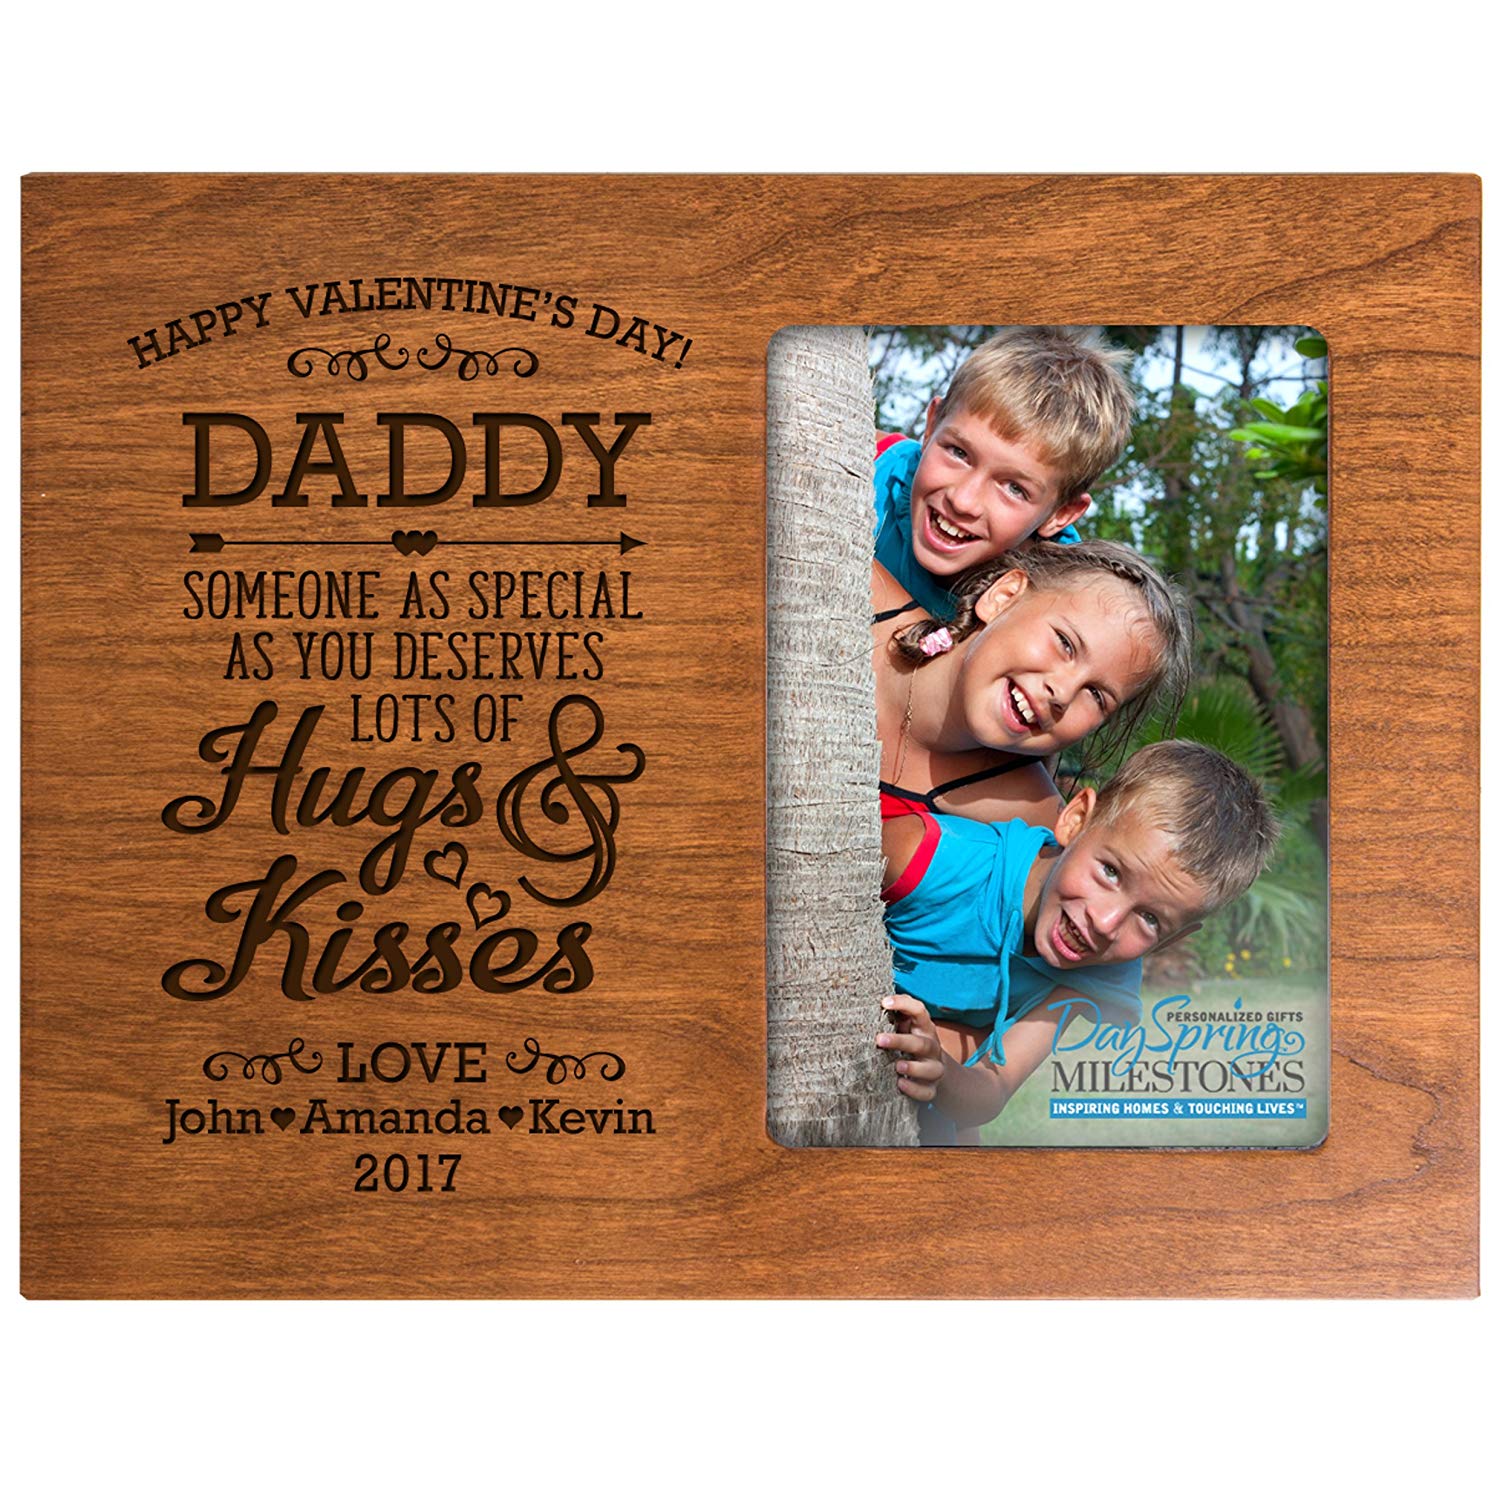 Personalized Valentine's Day Frames - Happy Valentine's Day Daddy Ivory